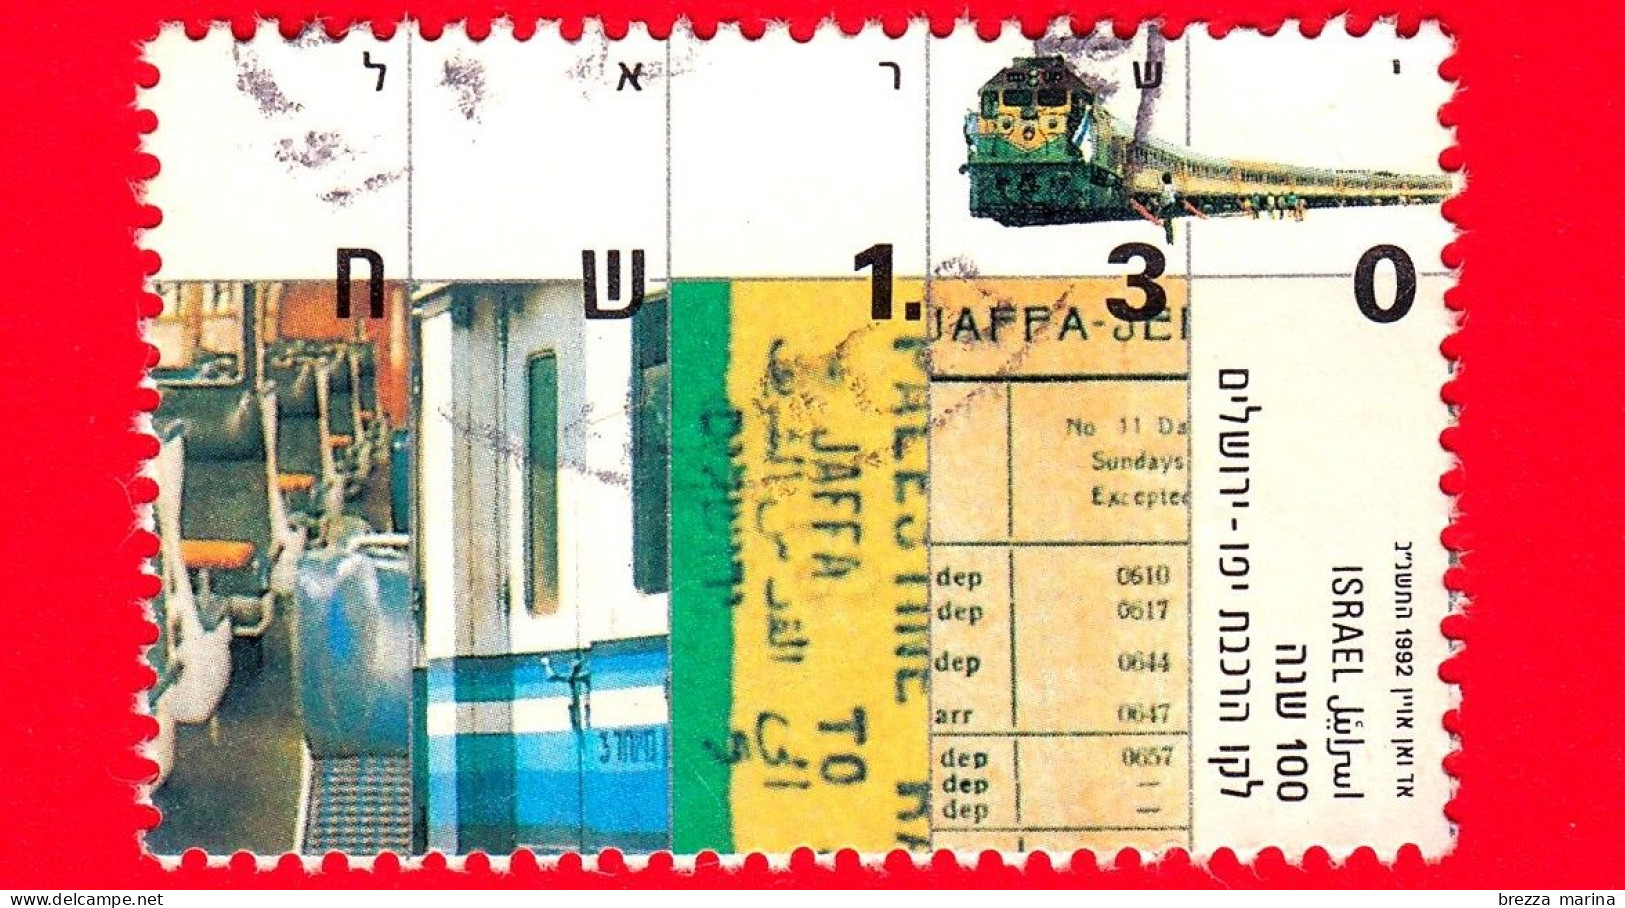 ISRAELE - Usato - 1992 - Centenario Della Linea Ferroviaria Jaffa-Gerusalemme - Locomotiva Diesel - 1.30 - Usados (sin Tab)